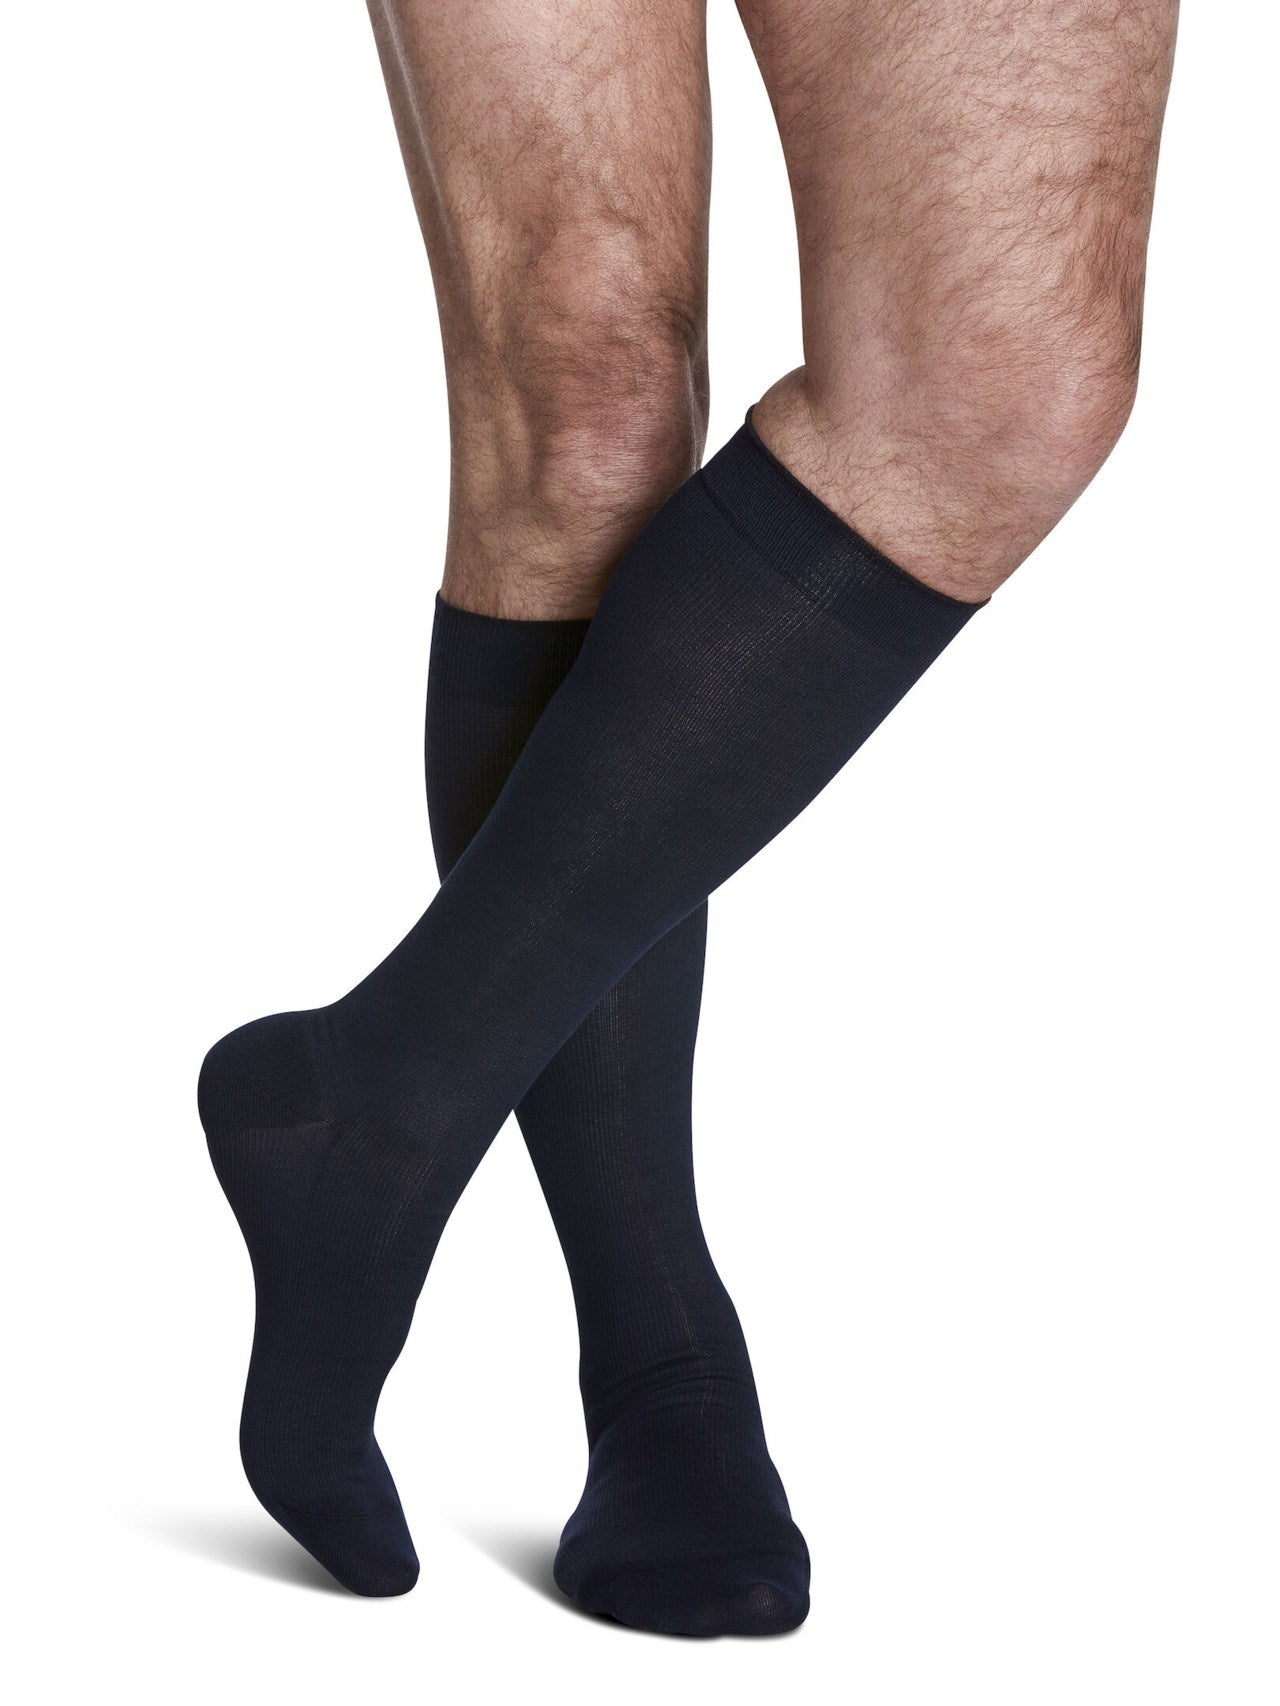 Sigvaris 190 Sea Island Cotton Compression Socks 15-20 mmHg Calf High for Men Closed Toe